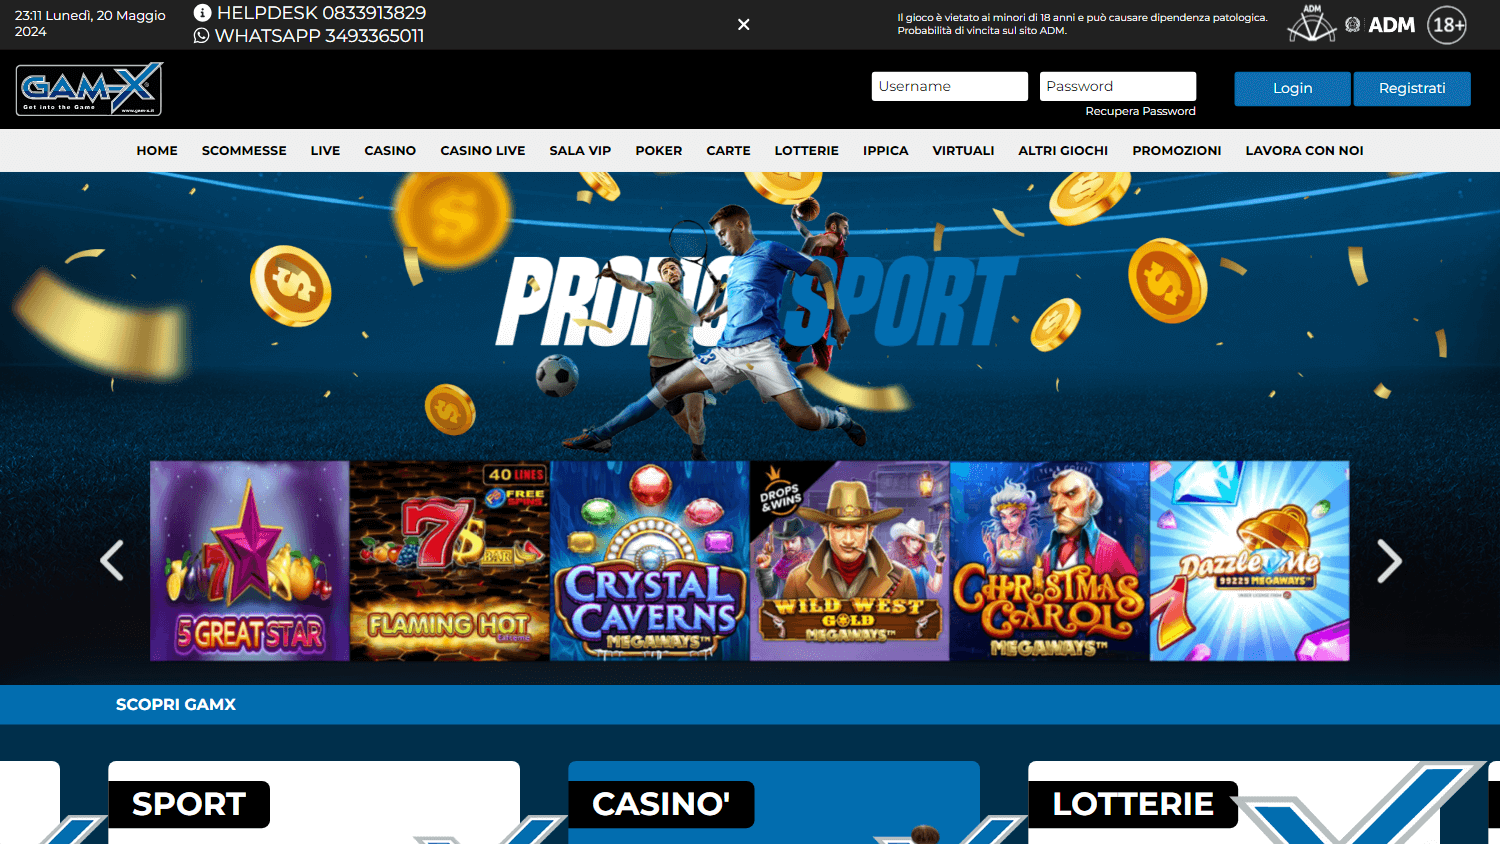 gam_x_casino_homepage_desktop